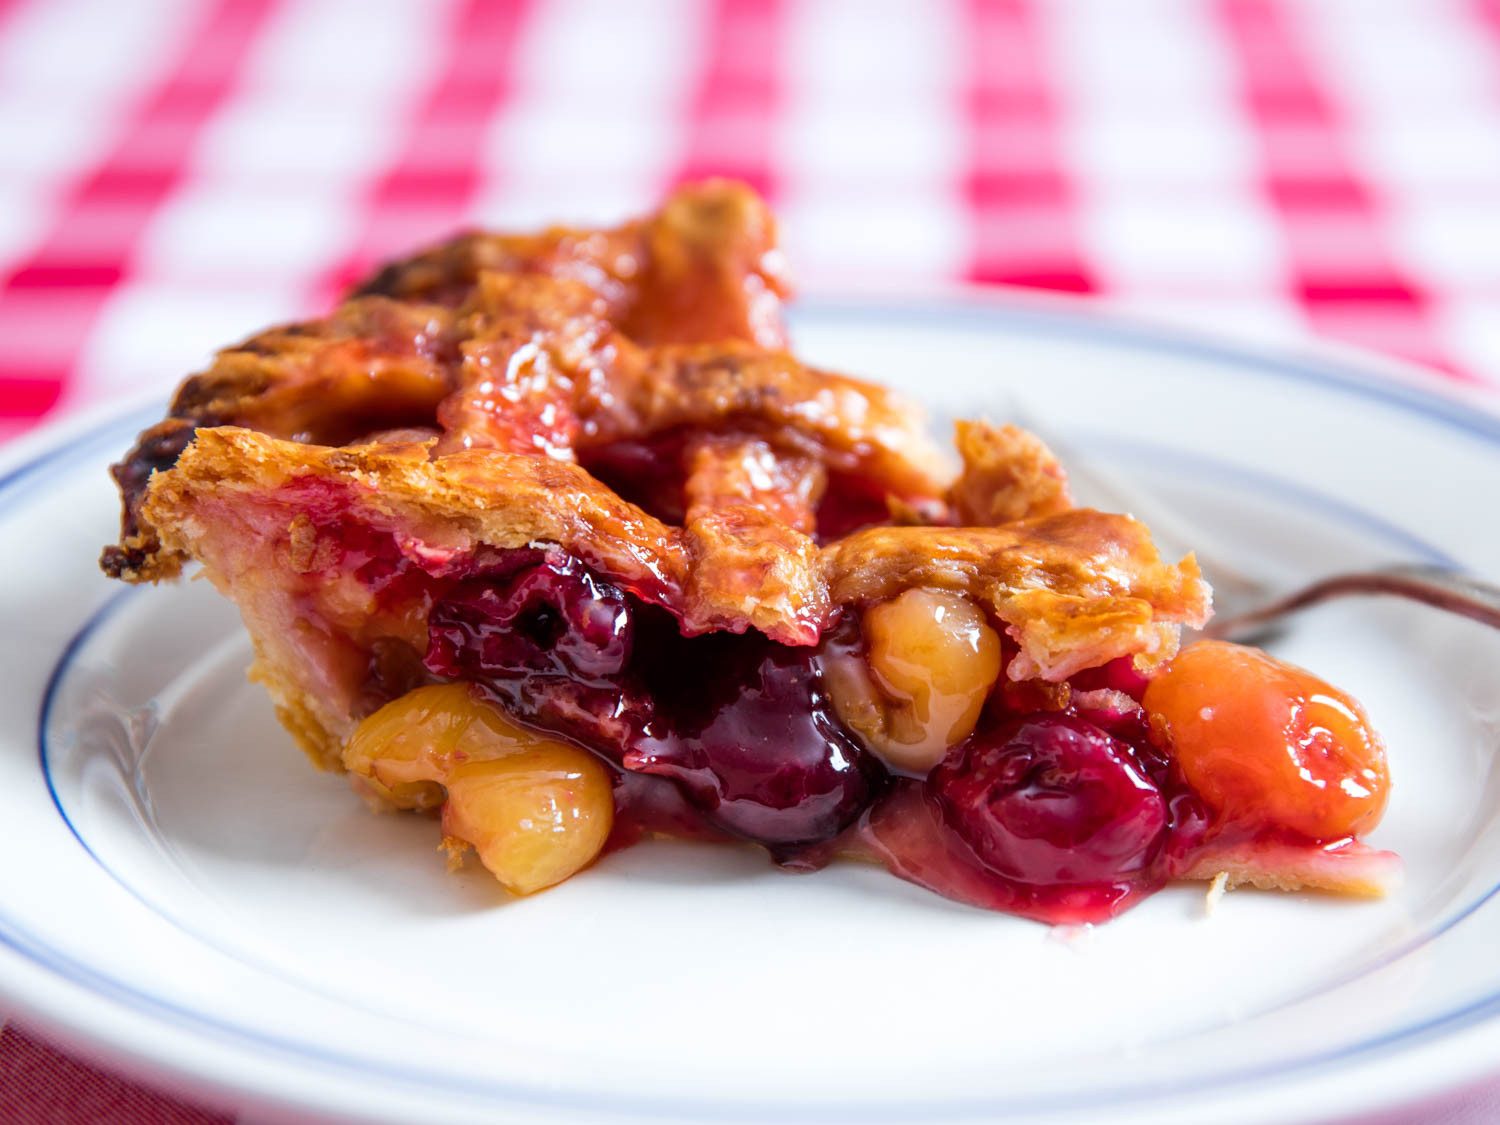 Recipes Using Cherry Pie Filling
 cherry pie filling recipes